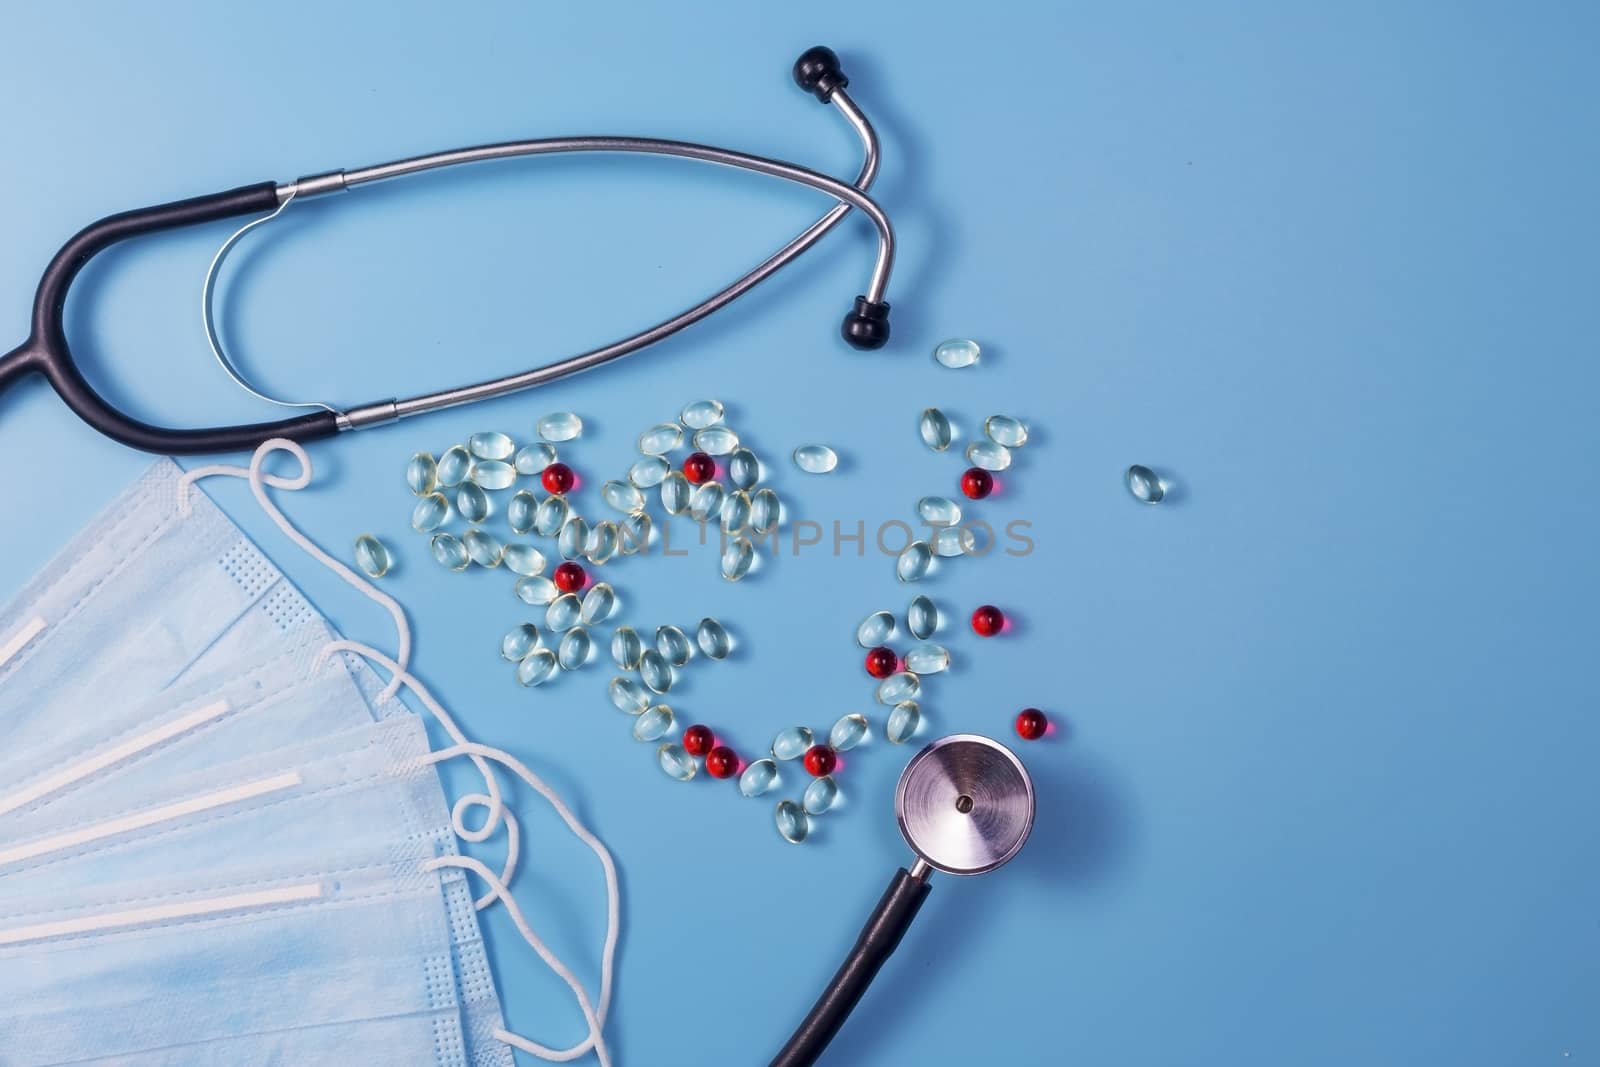 Covid-19, coronavirus treatment. Pills, stethoscope and medical masks on blue background.